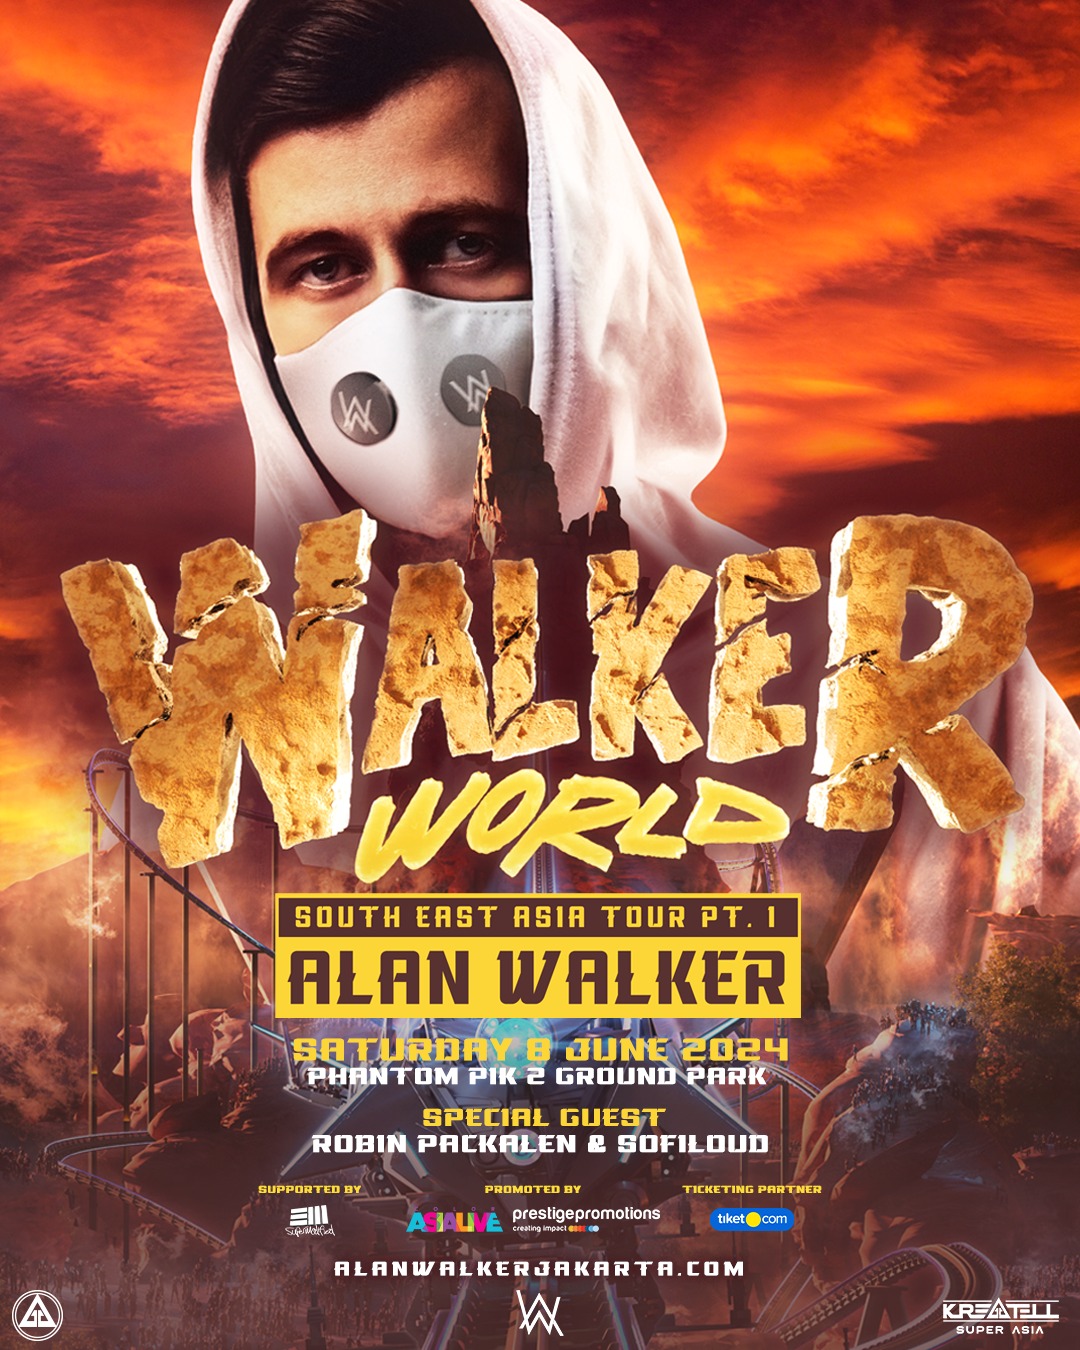 Alan Walker Resmi Umumkan Tur “Walker World Southeast Asia Tour Part 1”